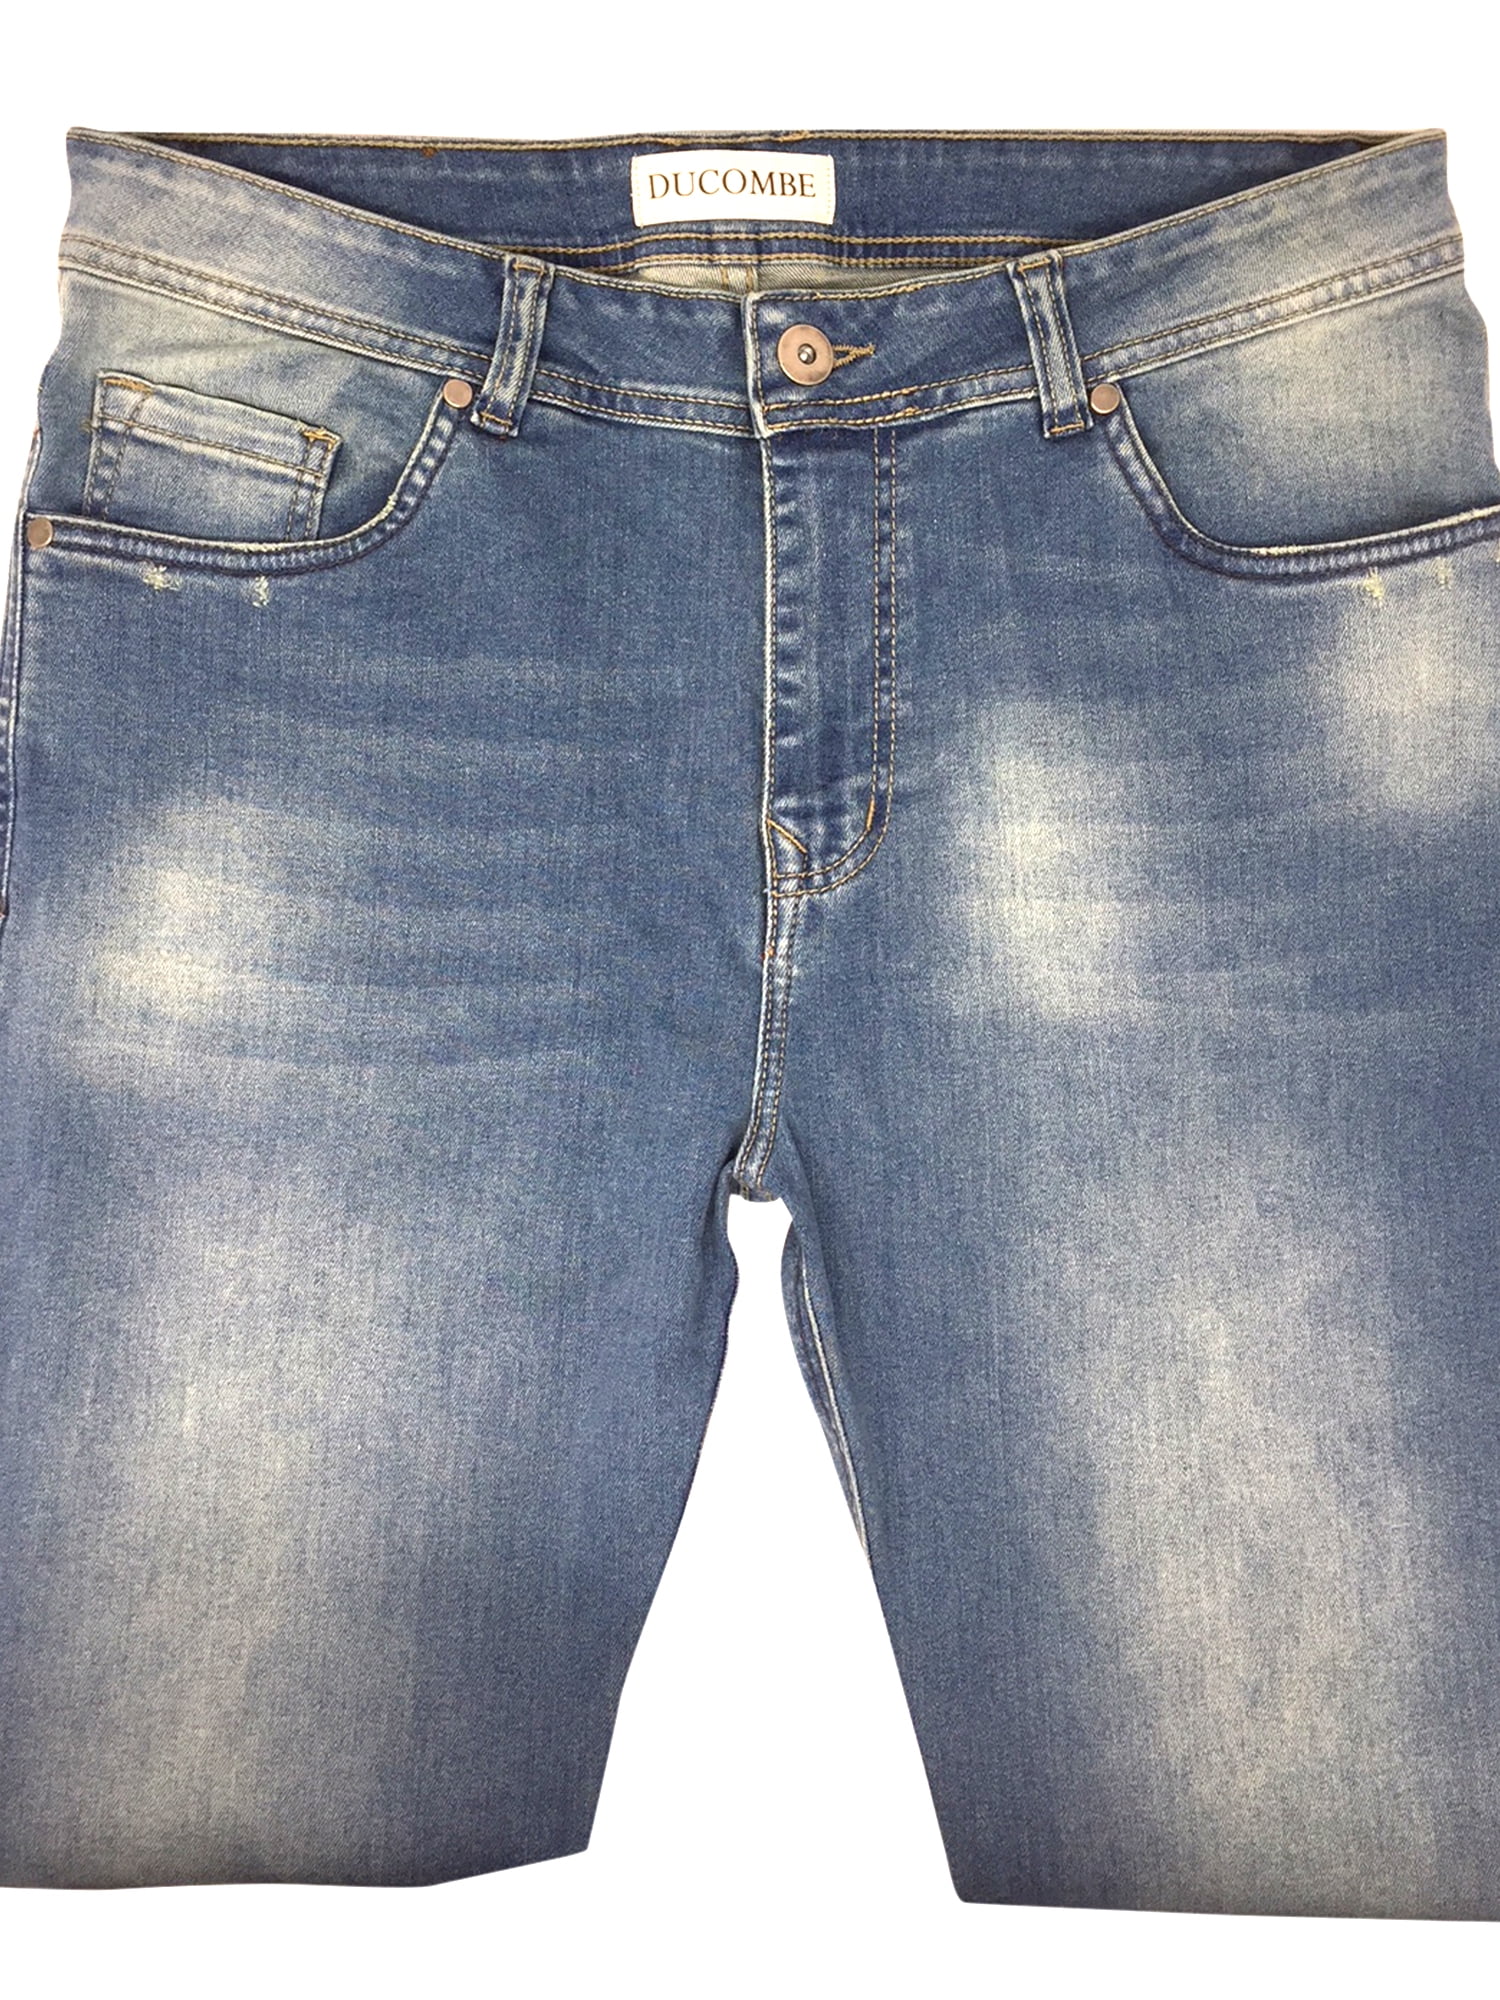 28 inch inseam men's jeans